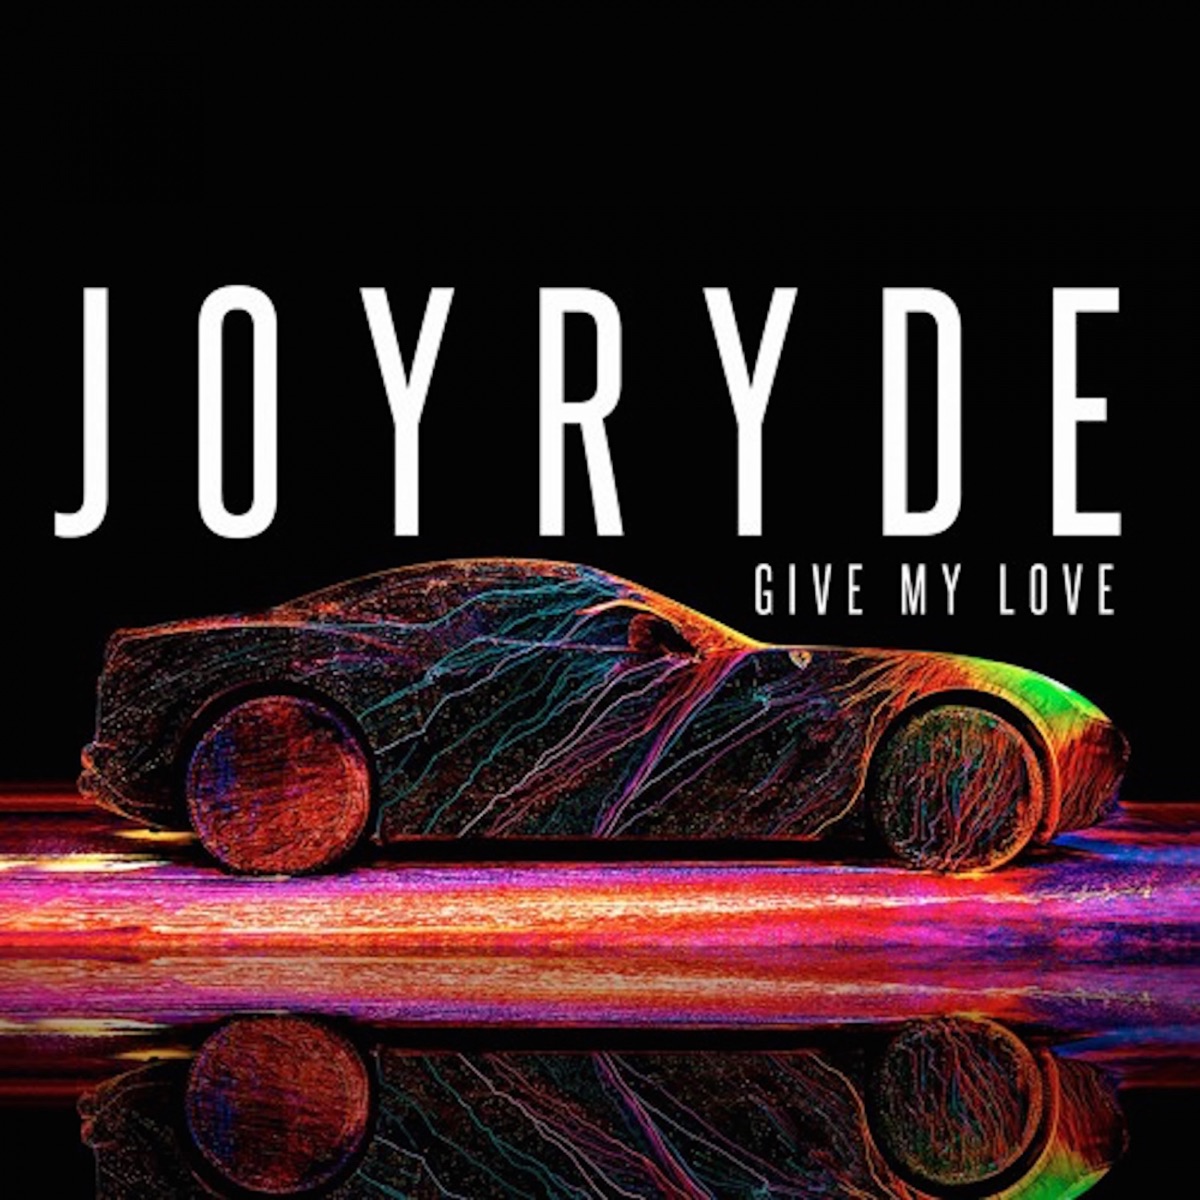 HOT DRUM - Single by JOYRYDE on Apple Music